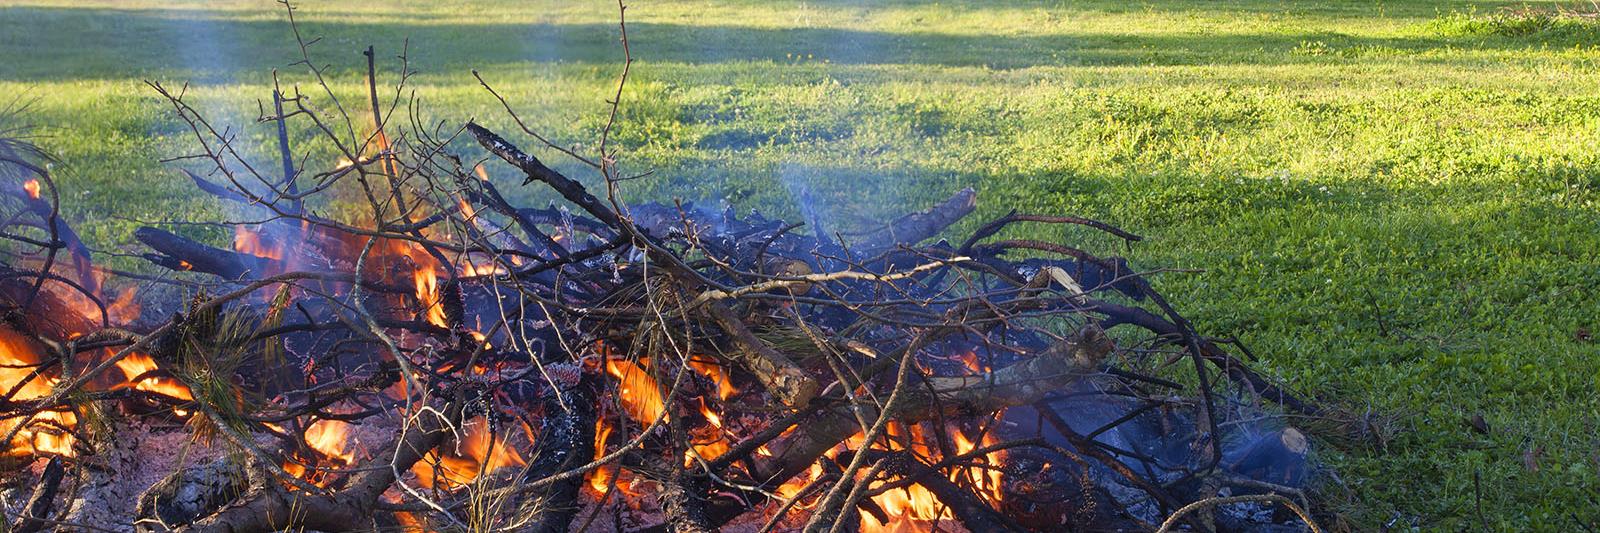 pile of brush being burned